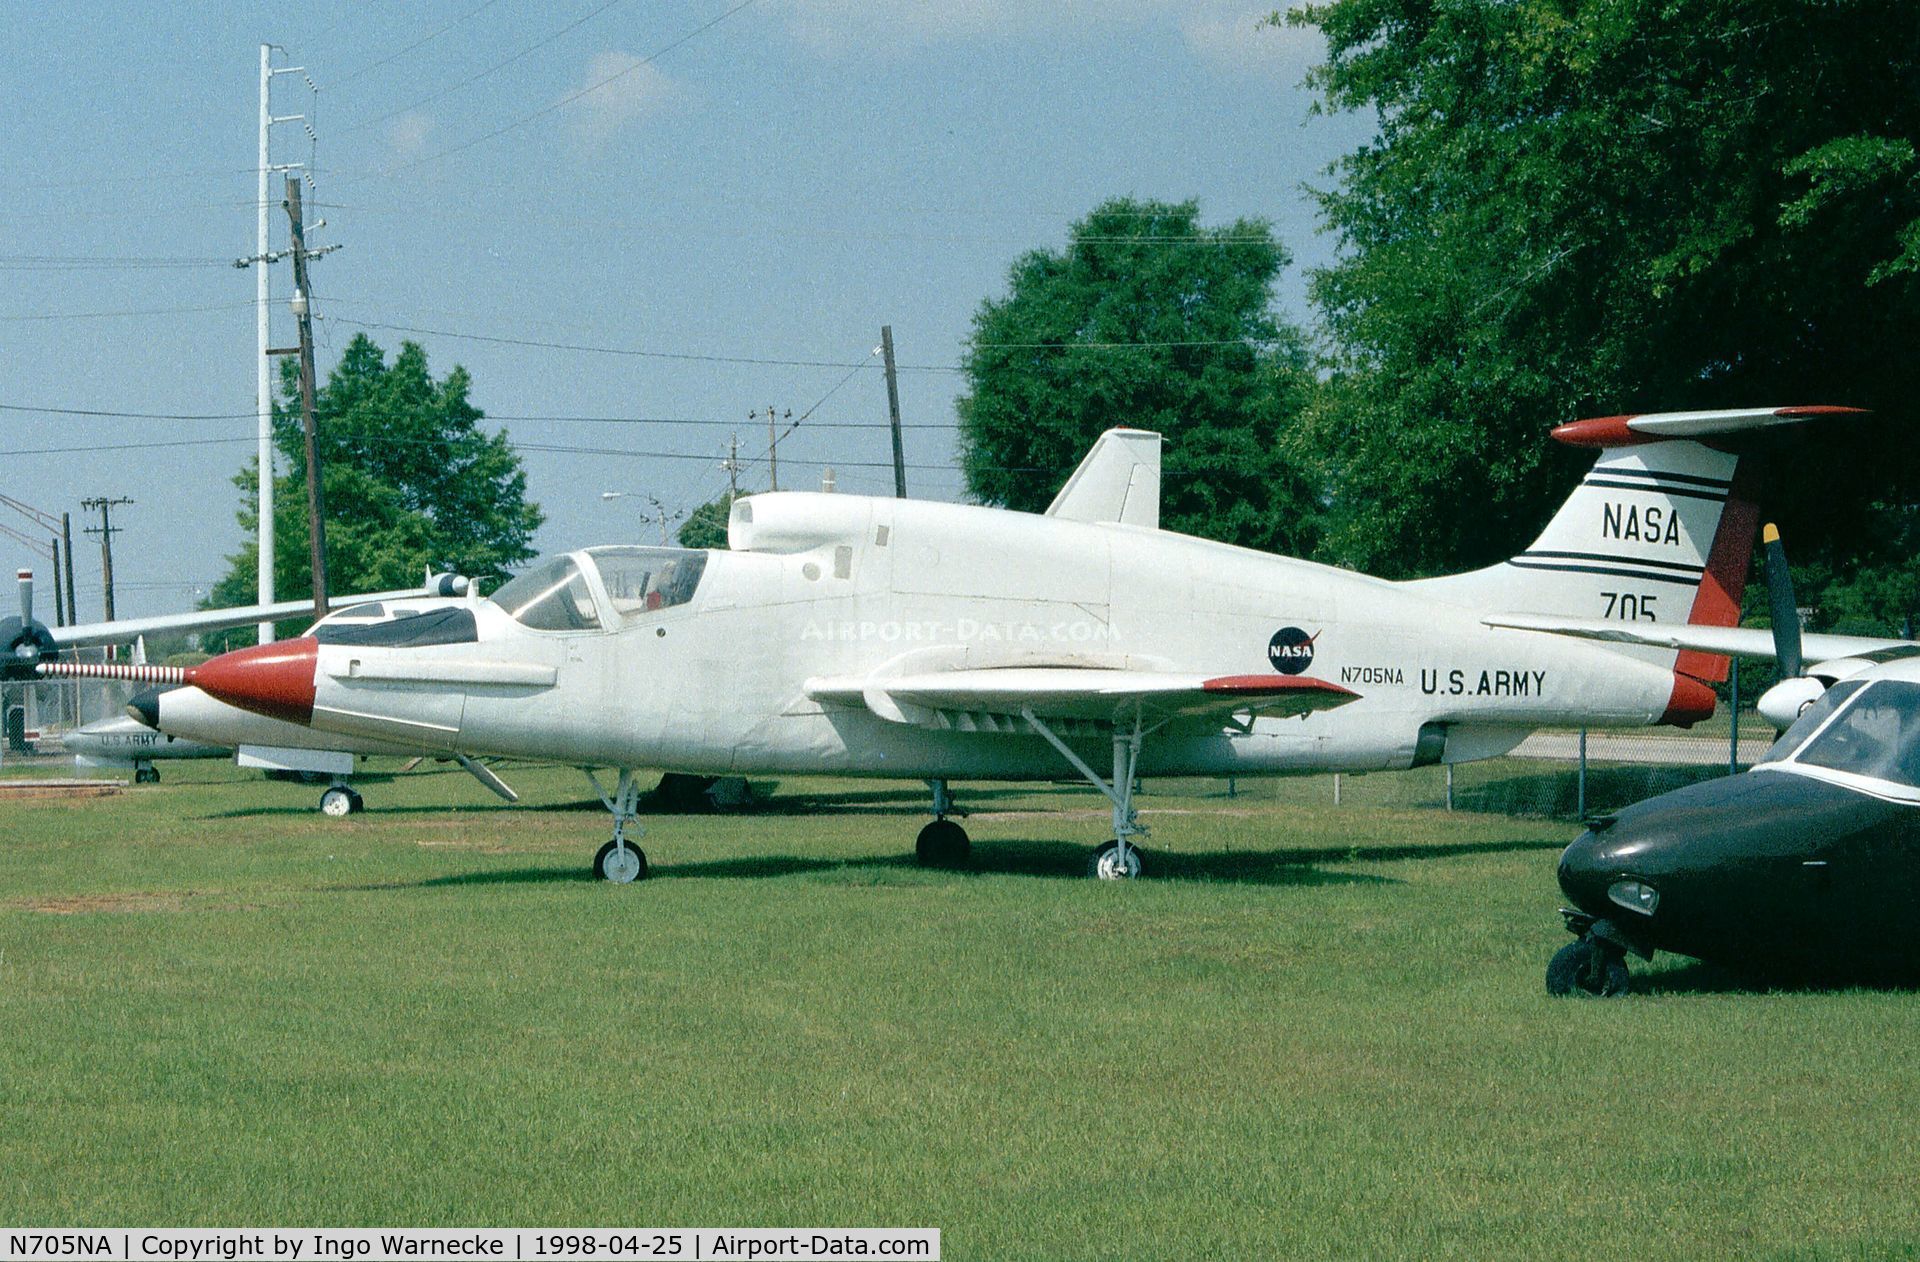 N705NA, 1962 Ryan Aeronautical XV-5B C/N Unknown, Ryan XV-5B  of NASA / US Army at the US Army Aviation Museum, Ft Rucker AL